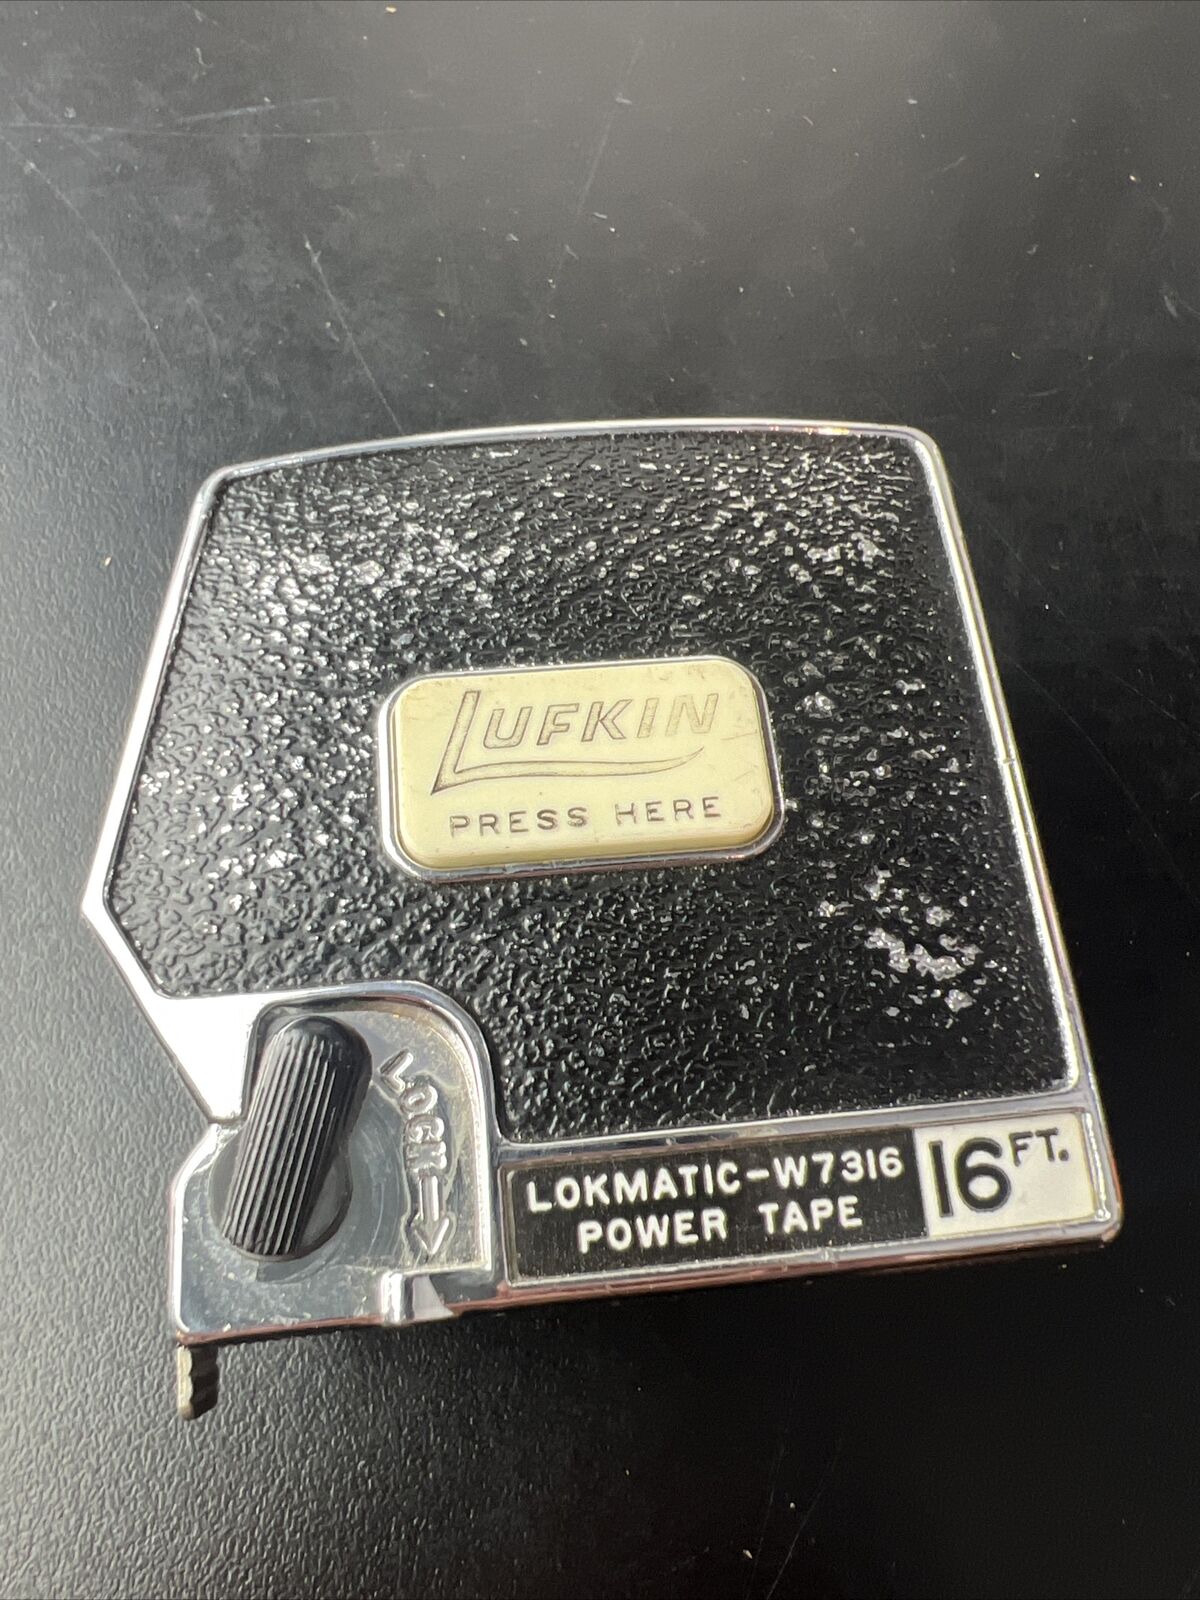 Lufkin Lokmatic W7316 Power Tape, 16 ft Vintage Tape Measure Black Silver White